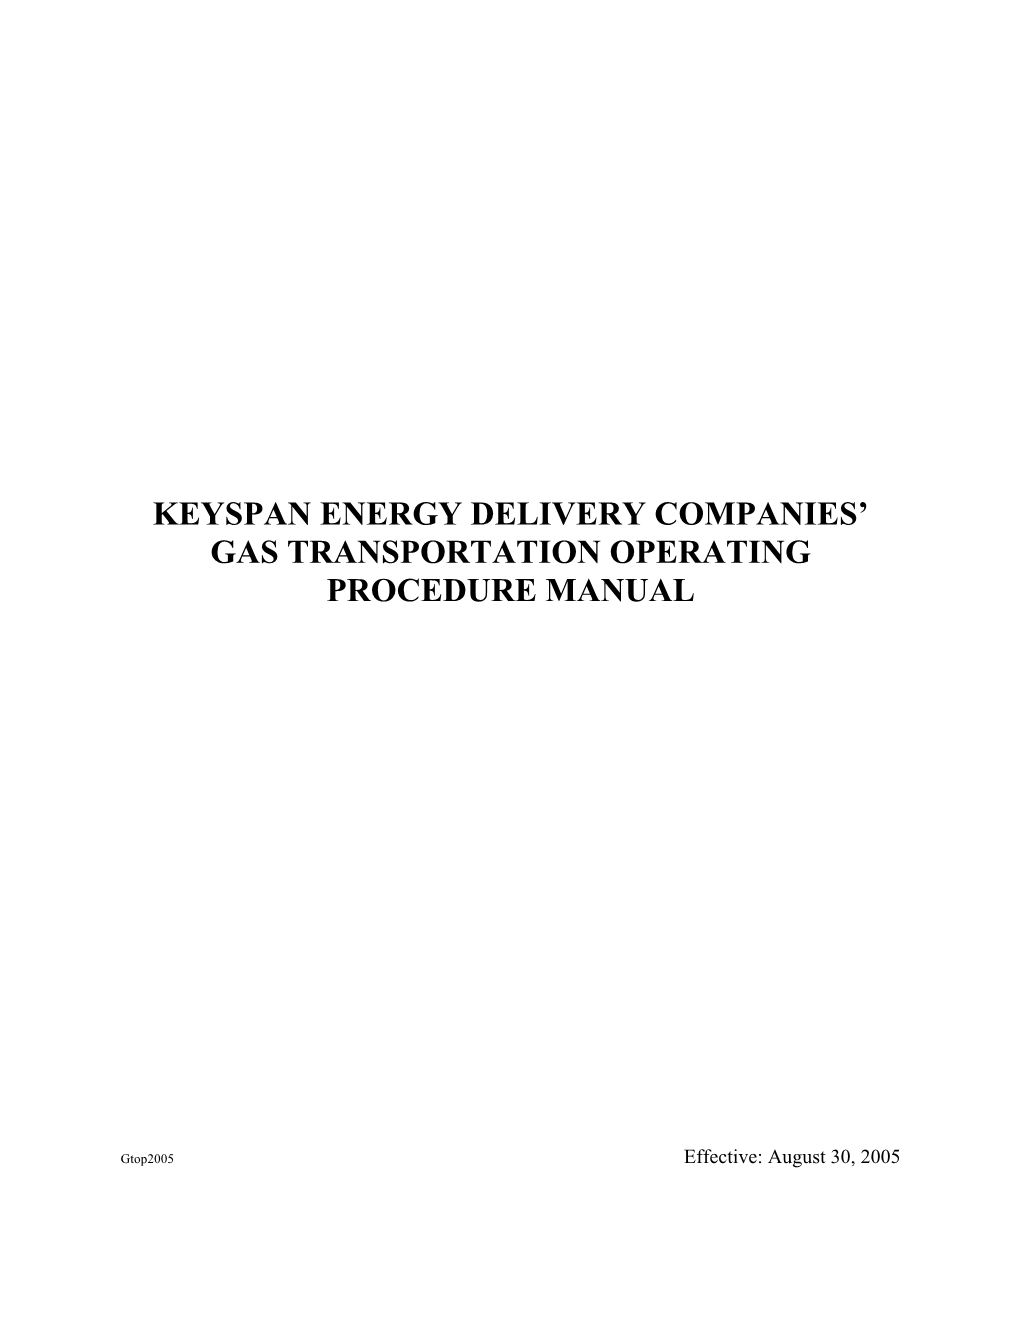 Keyspan Energy Delivery Companies' Gas Transportation Operating